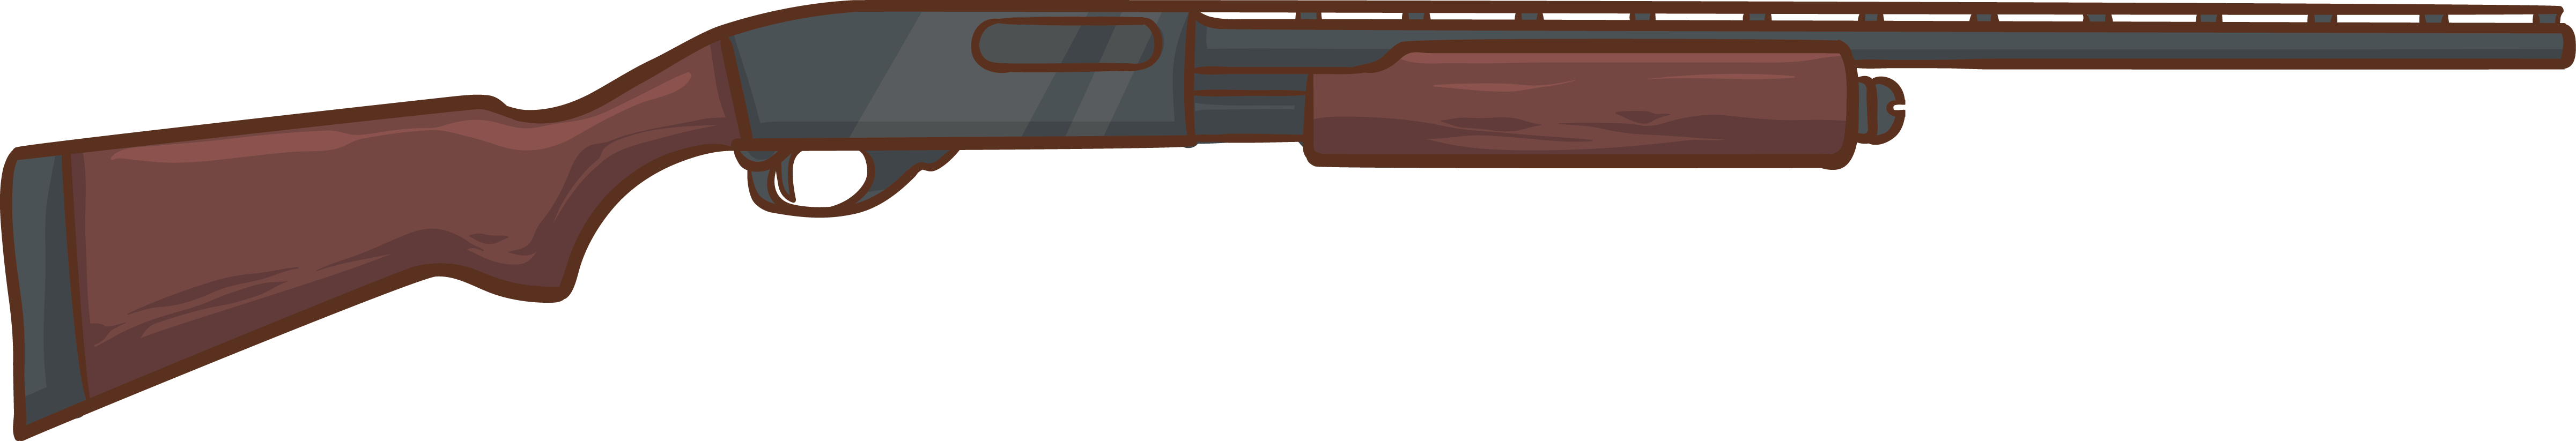 Remington 870 Pump Shotgun